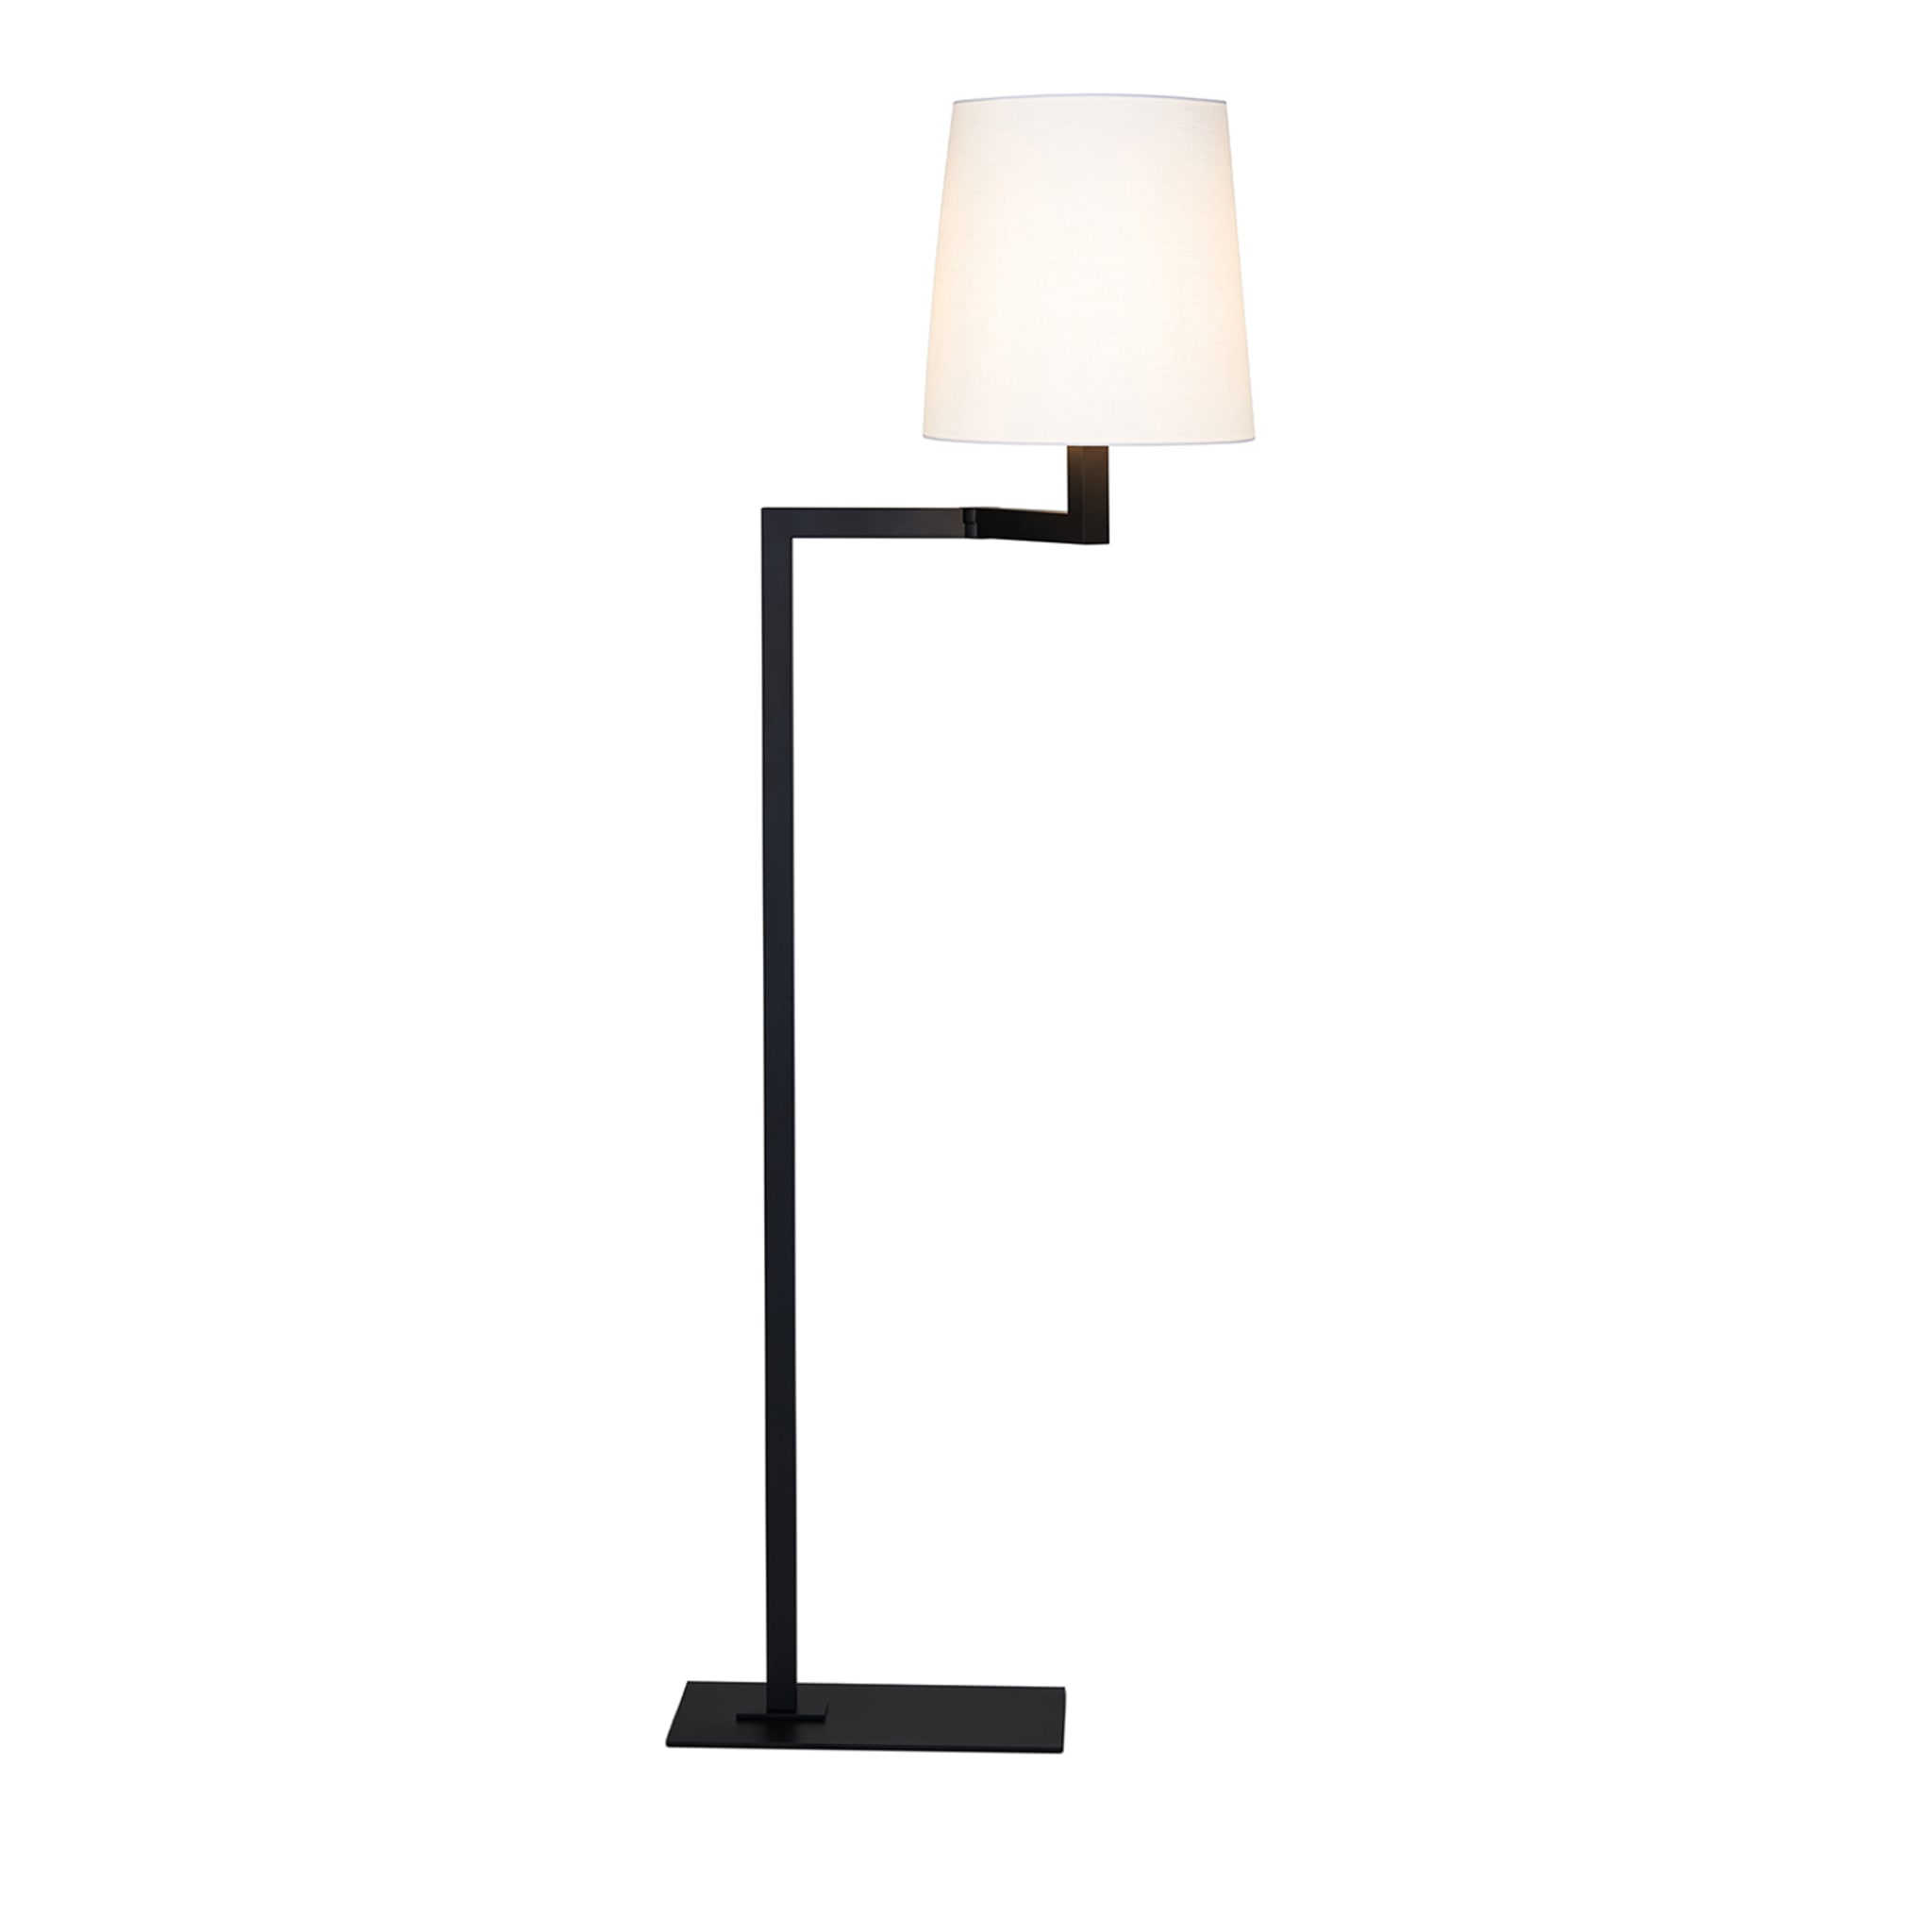 Tonda Angled Black Floor Lamp with White Cotton Shade - Main view